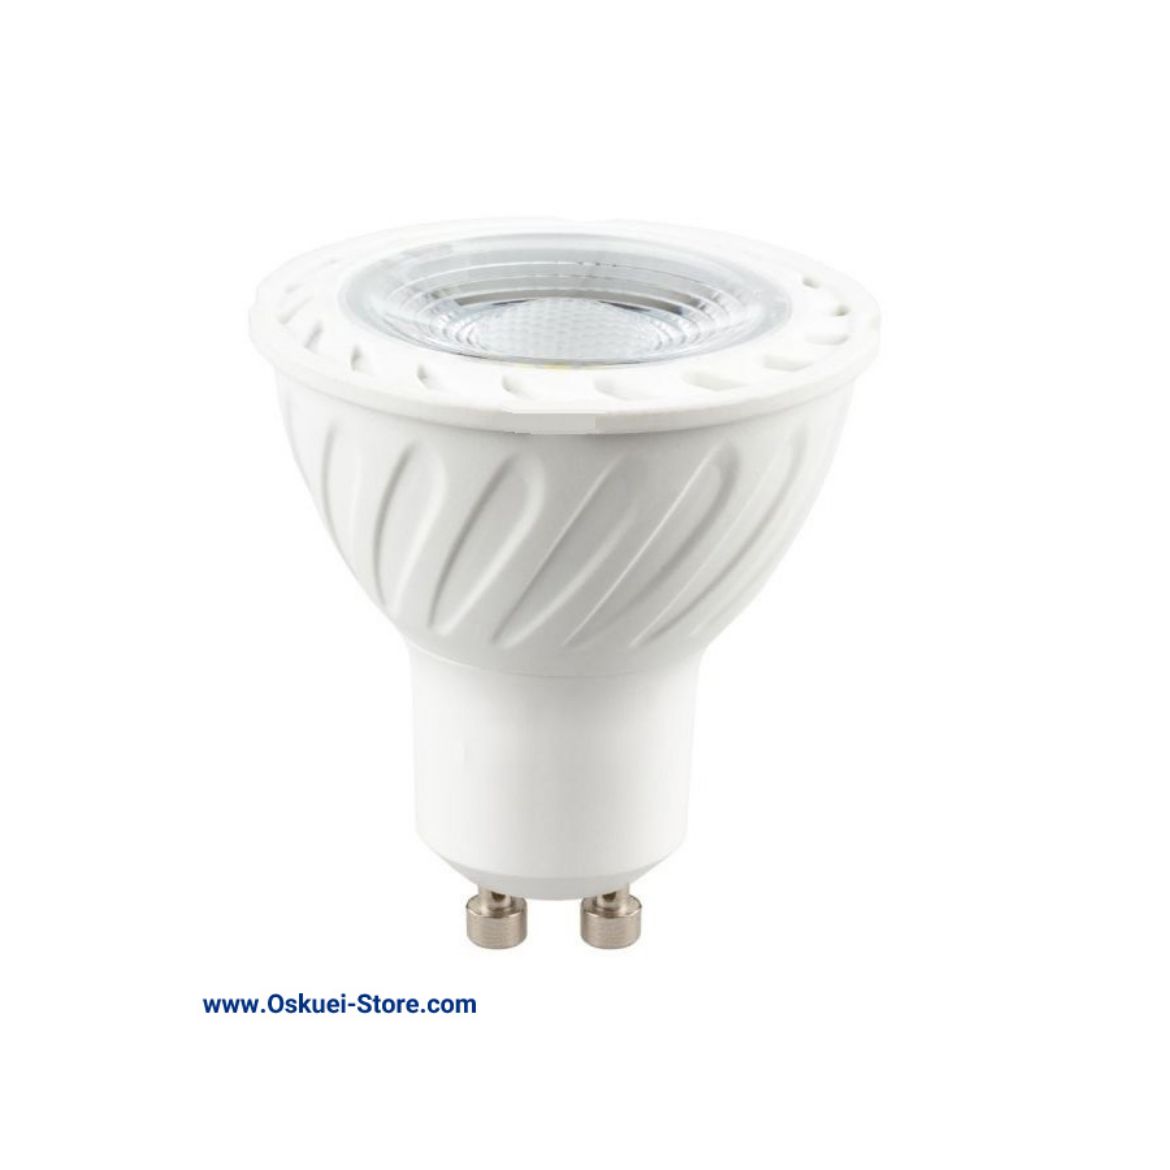 Amada light 7 Watt LED halogen LAMP